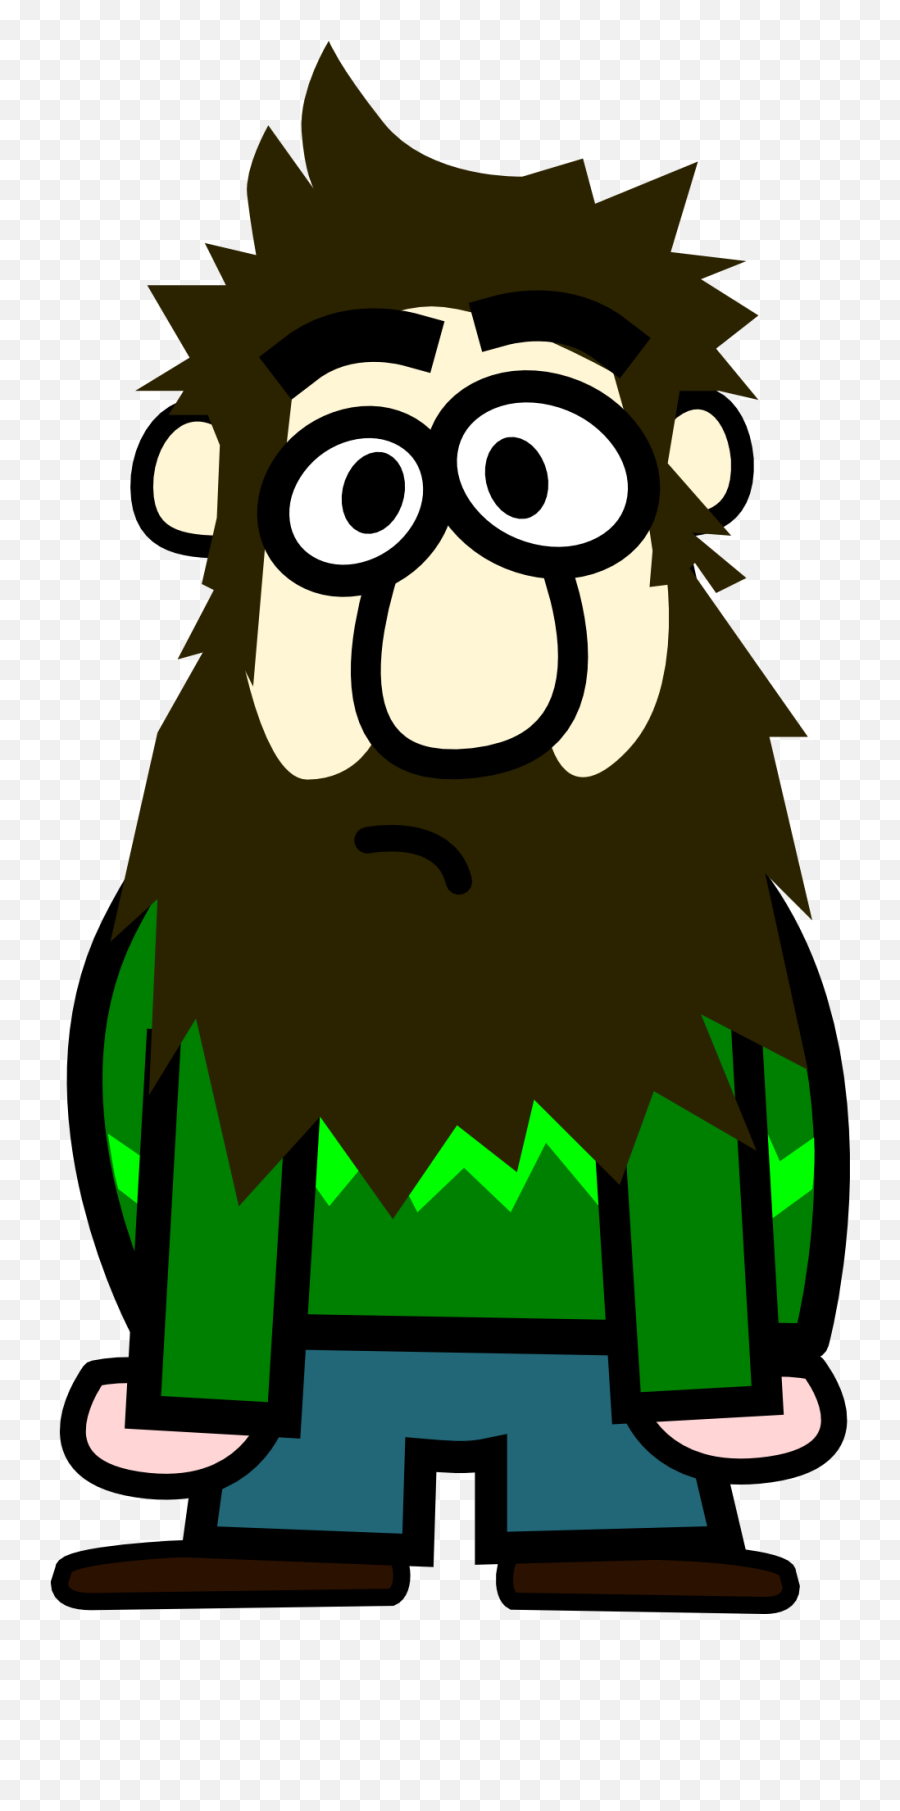 Drawn Unhappy Cartoon Bearded Man Free - Fat Cartoon With Beard Emoji,Unhappycartoon Animal Range Of Emotions